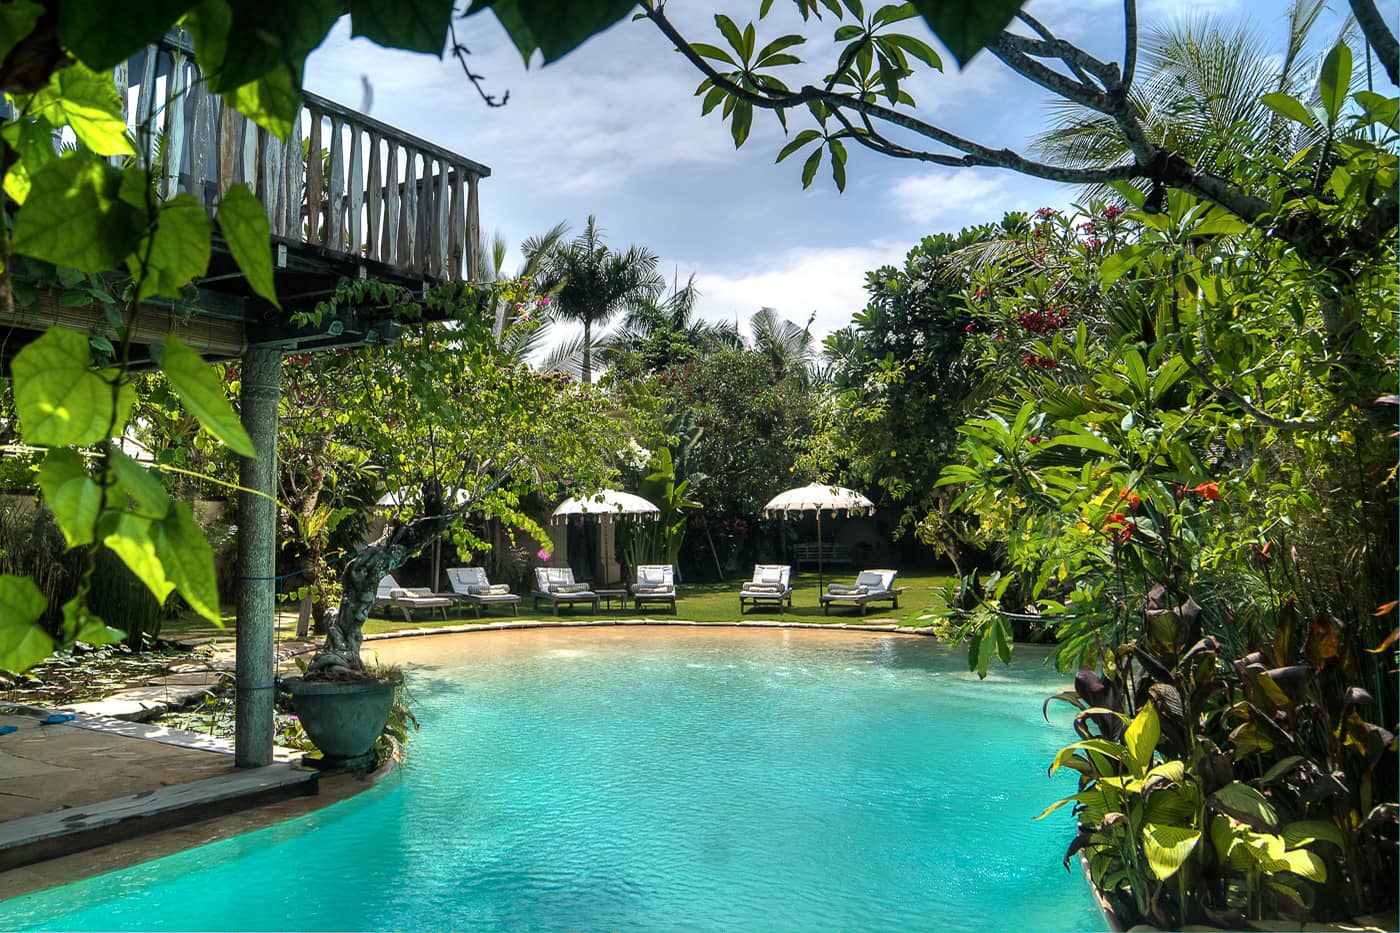 Villa Phinisi photos in Seminyak Bali